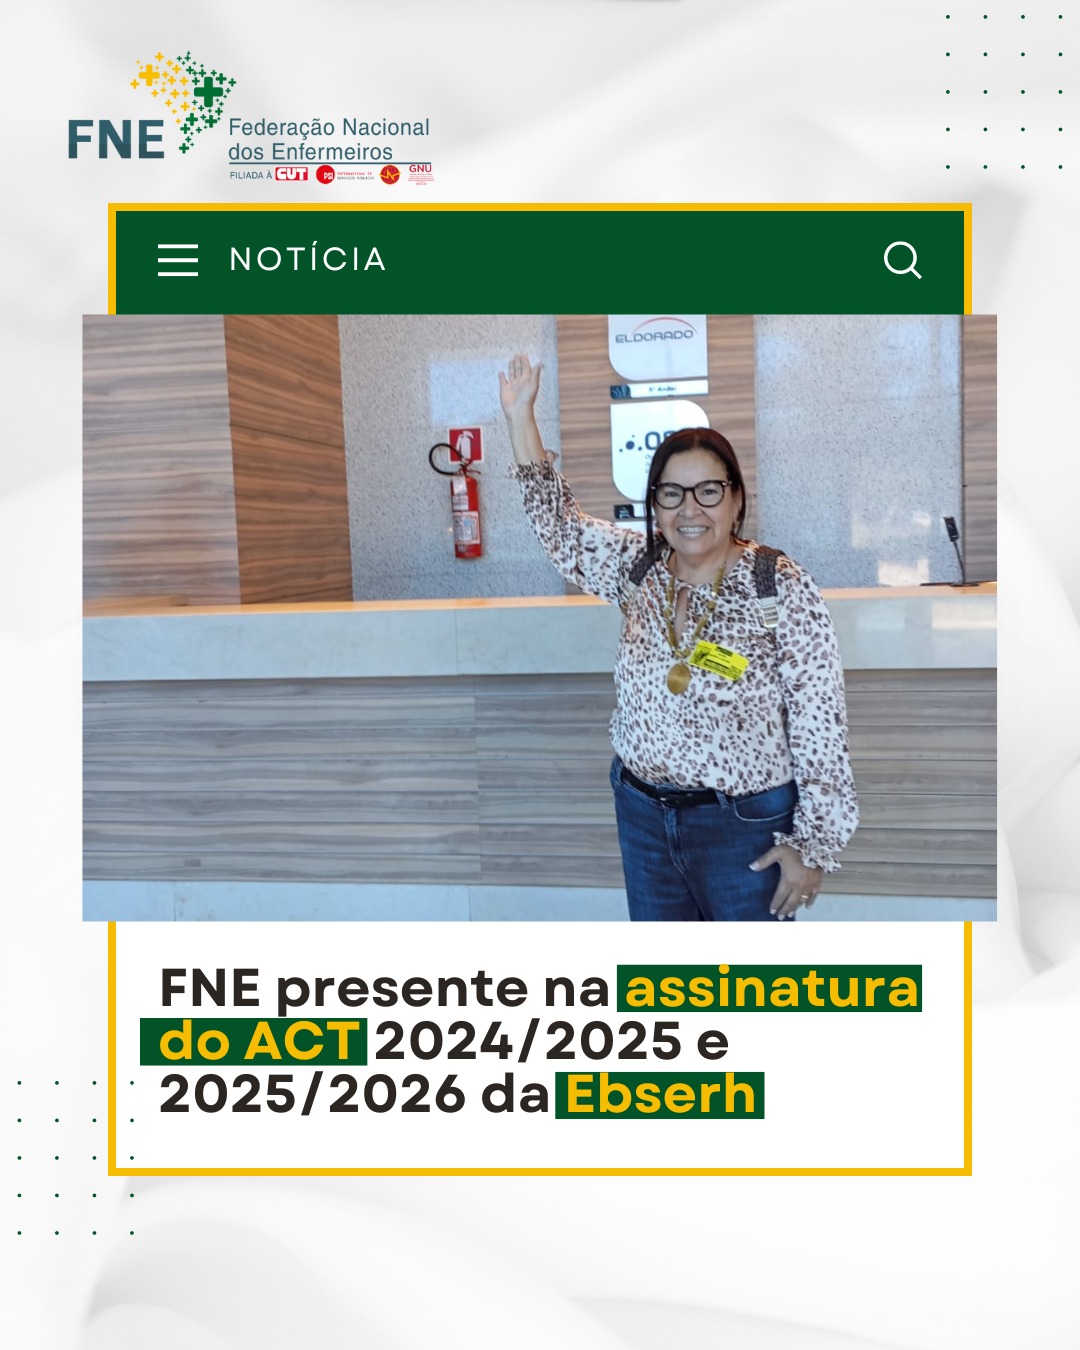 FNE presente na assinatura do ACT 2024/2025 e 2025/2026 da Ebserh